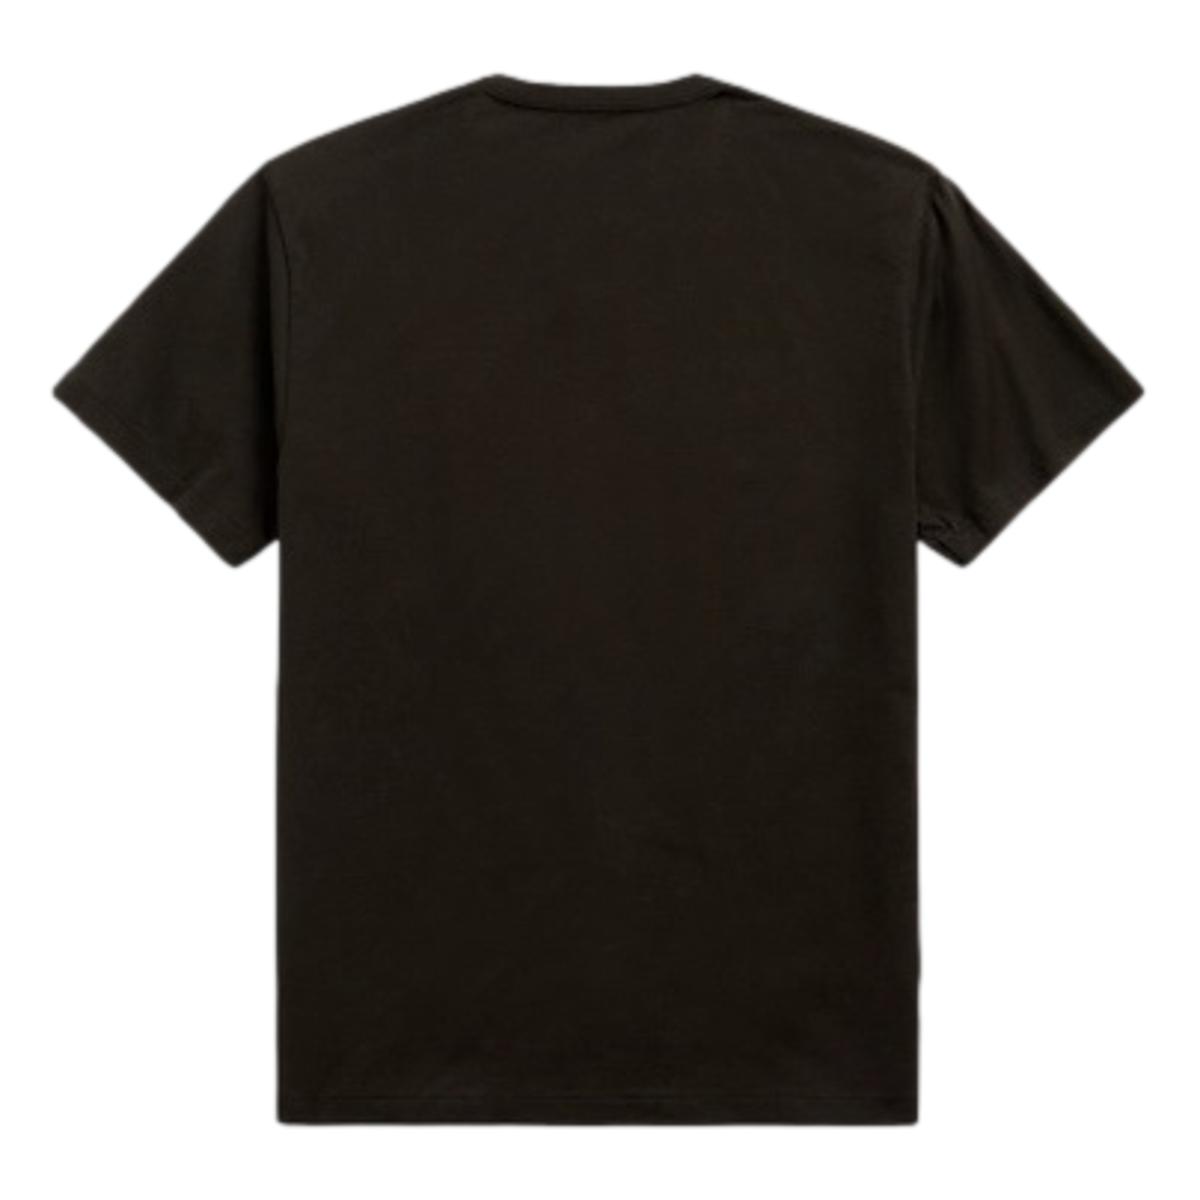 RRL Ranch Logo T-Shirt Faded Black Canvas - T Shirt